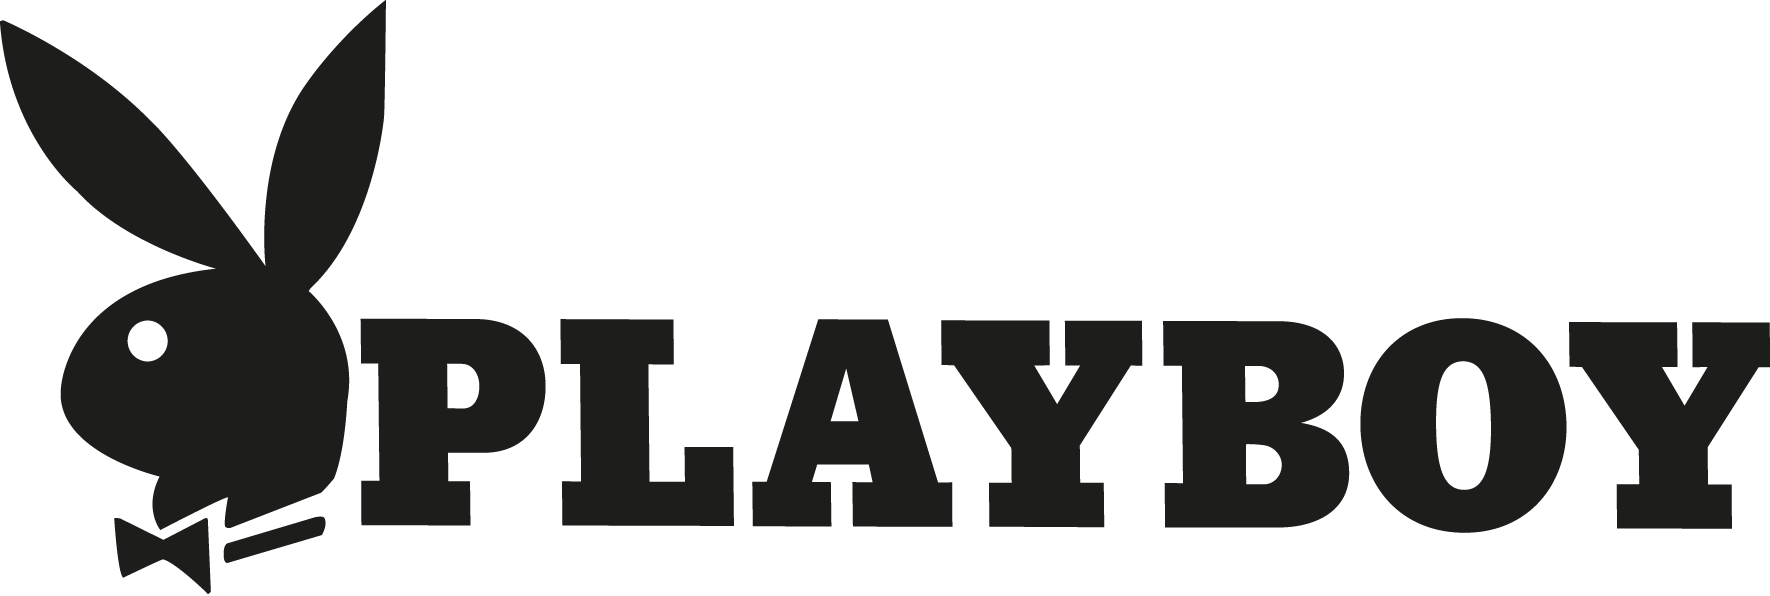 Playboy Logo Marques Et Logos Histoire Et Signification Png Images